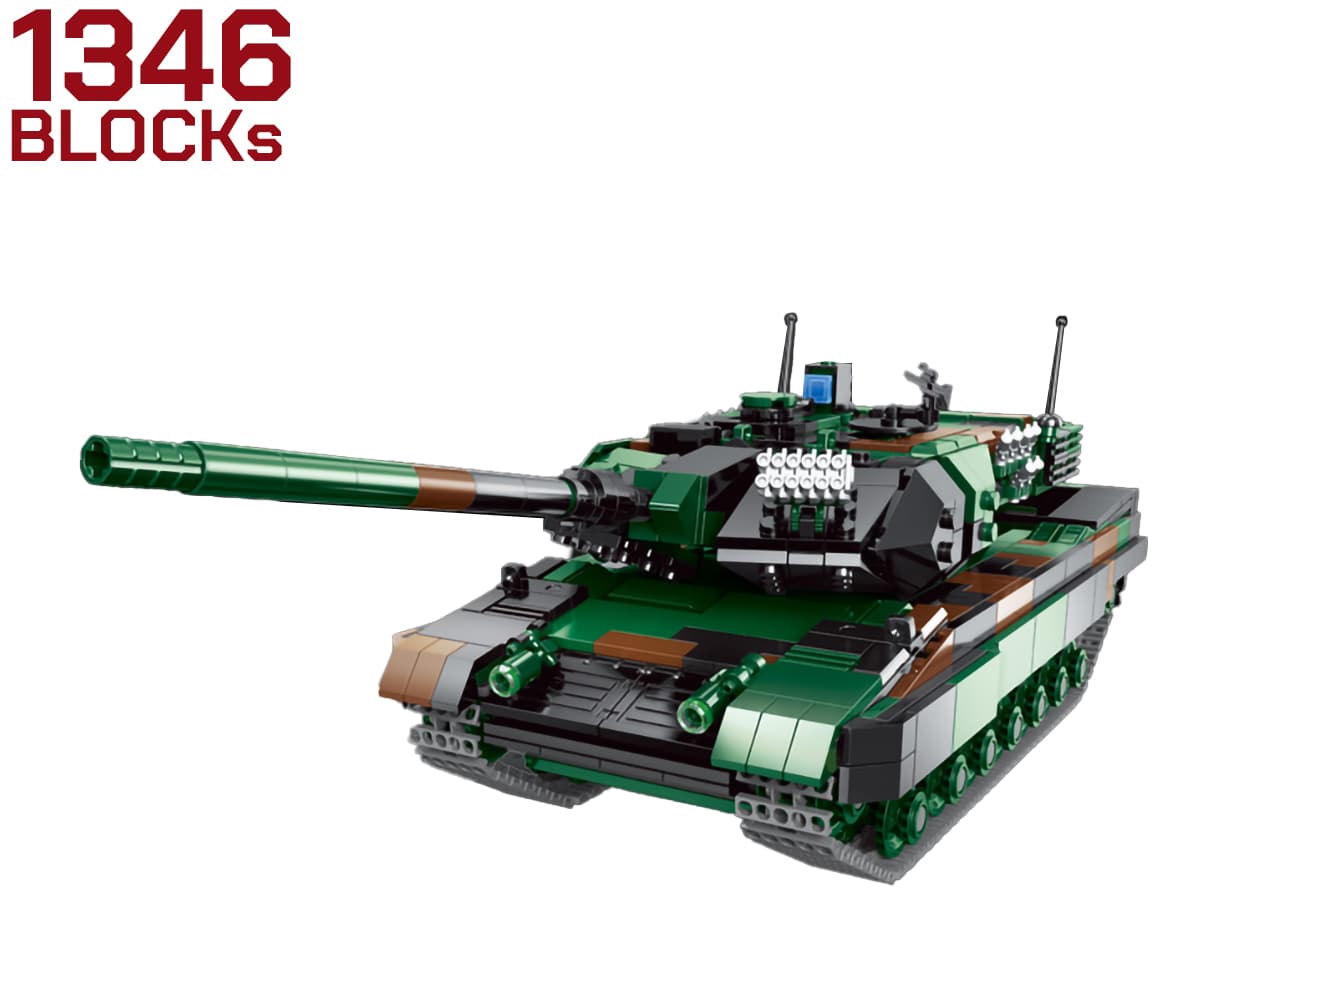 AFM レオパルト2A6 主力戦車 1346Blocks | ミリタリーベース 